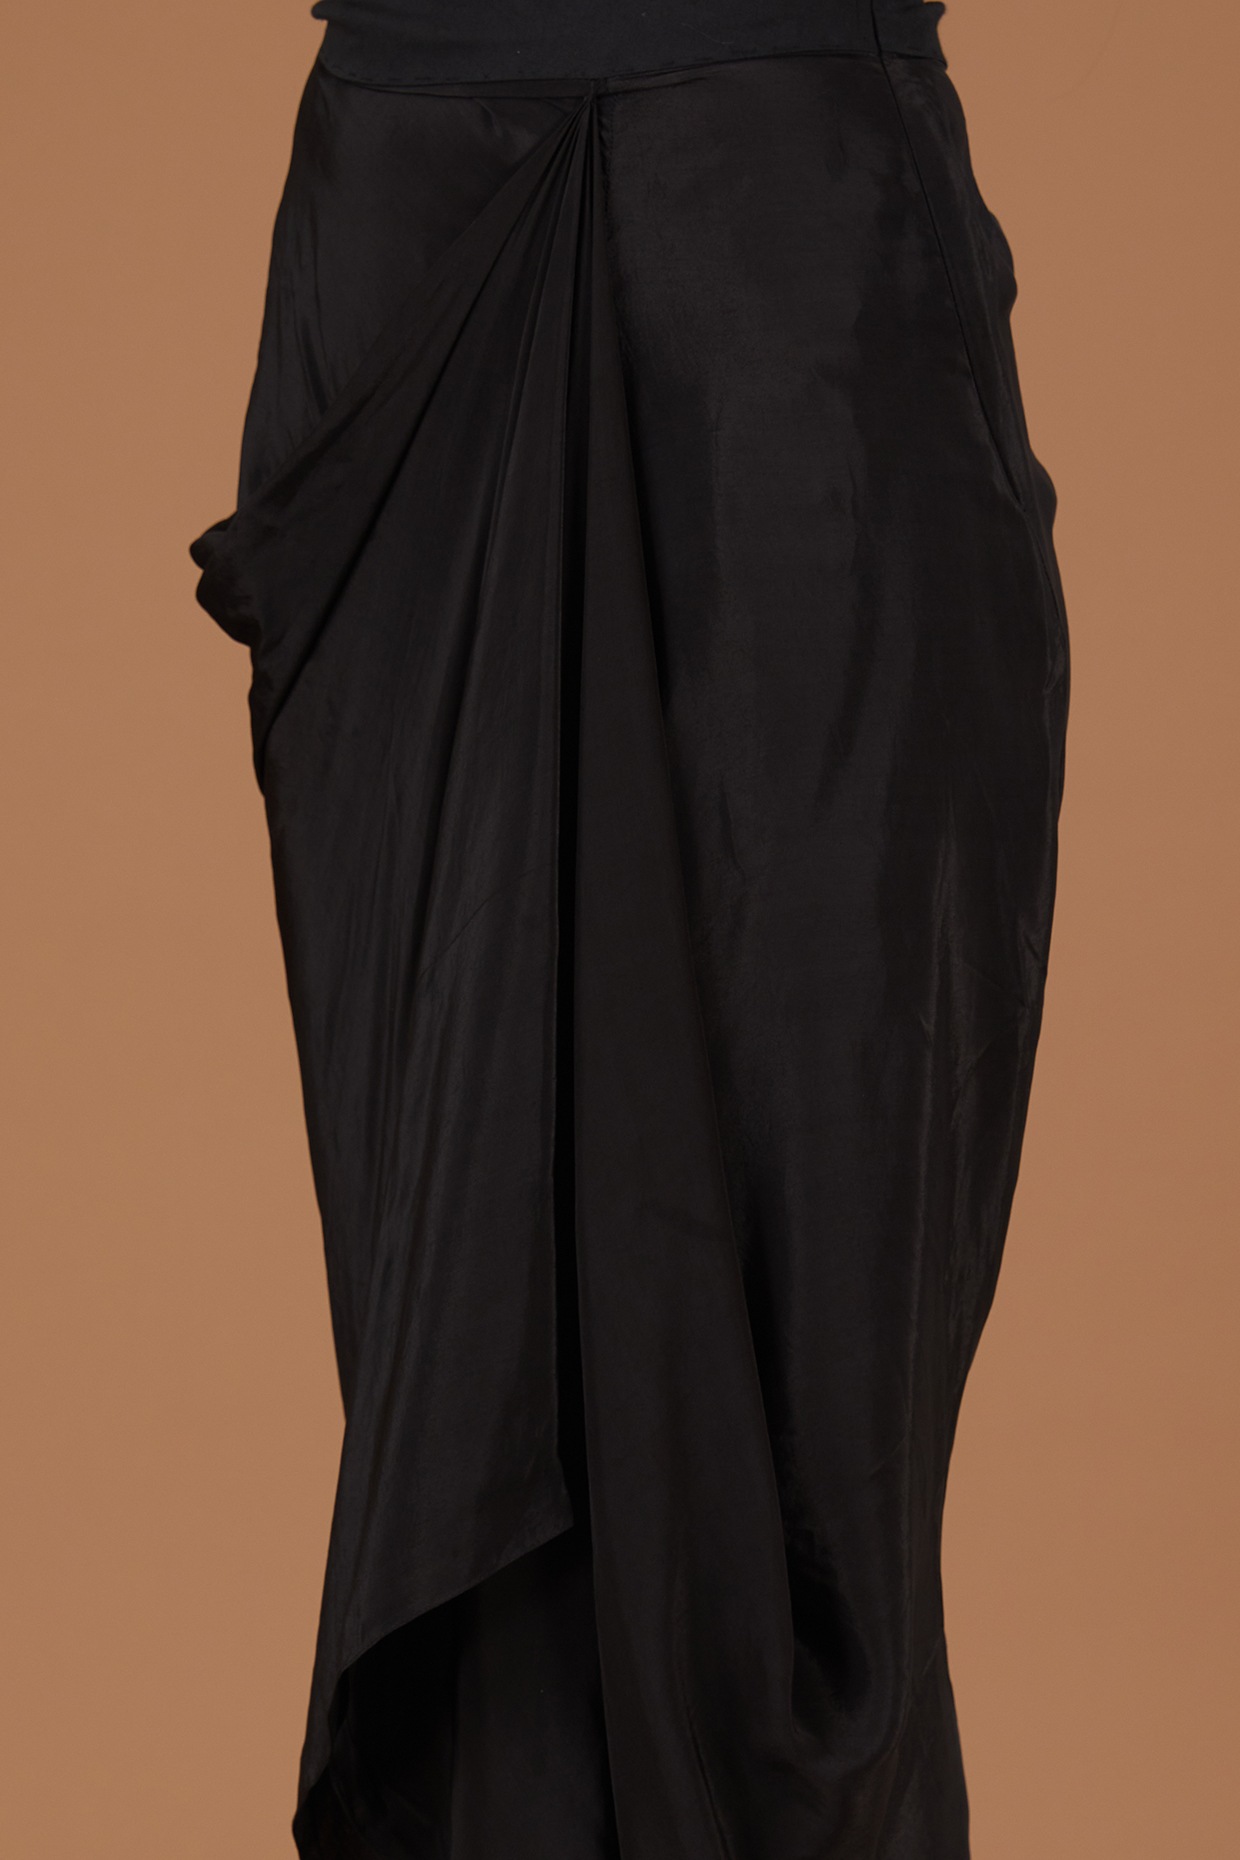 LK Bennett Folly Black Crepe Pencil Skirt (Skirts,Pencil Skirts) IFCHIC.COM